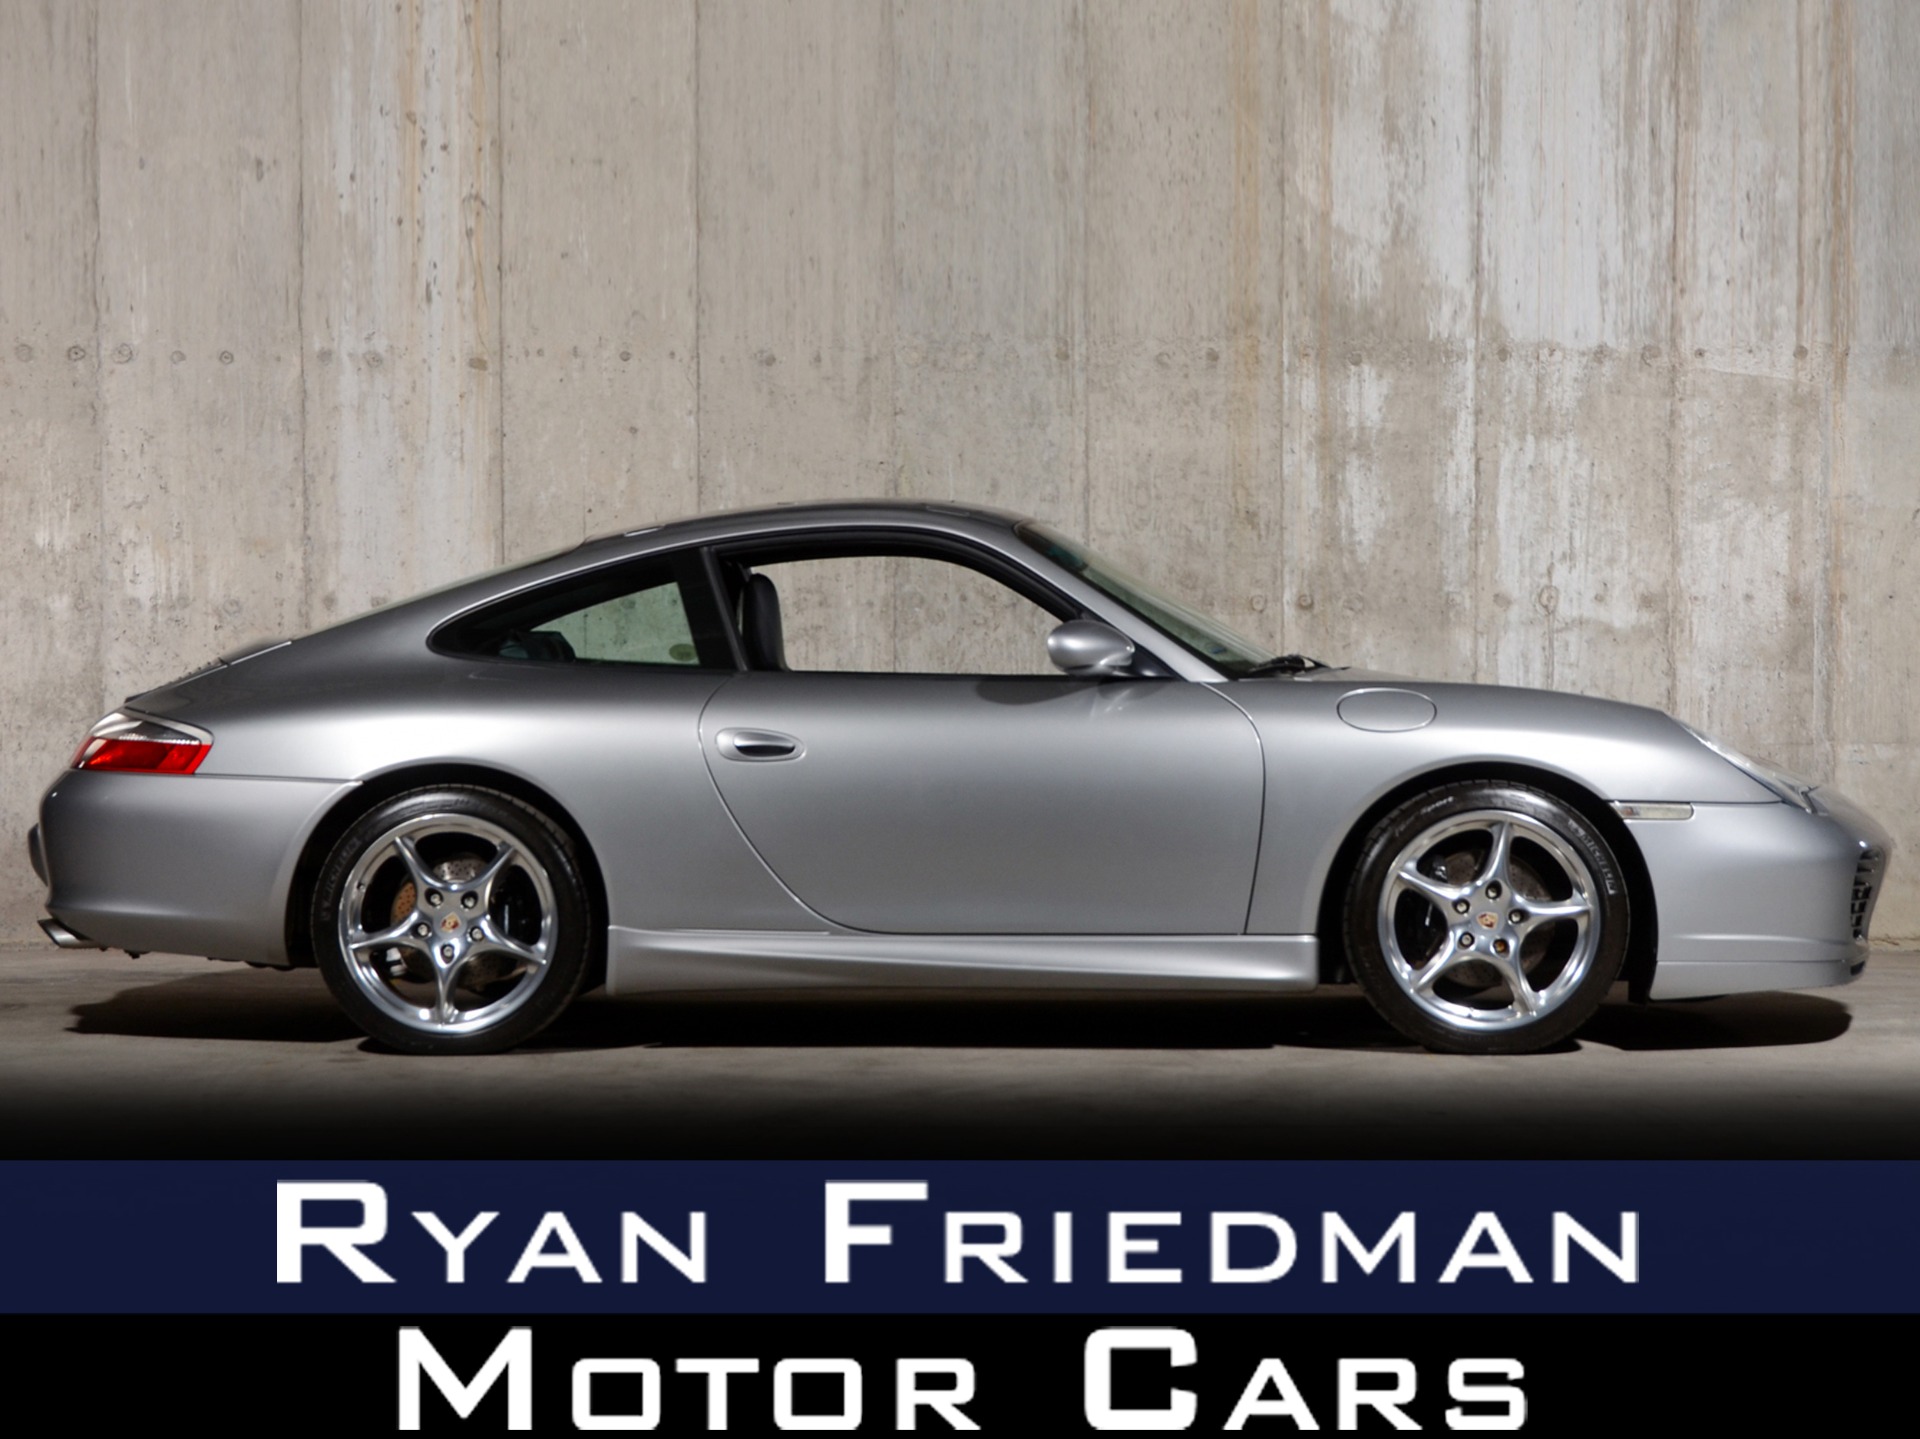 2004 (Sold) Motor Ryan Porsche 911 | Anniversary Edition Carrera LLC Sale #1406 Friedman For 40th Stock Cars Used